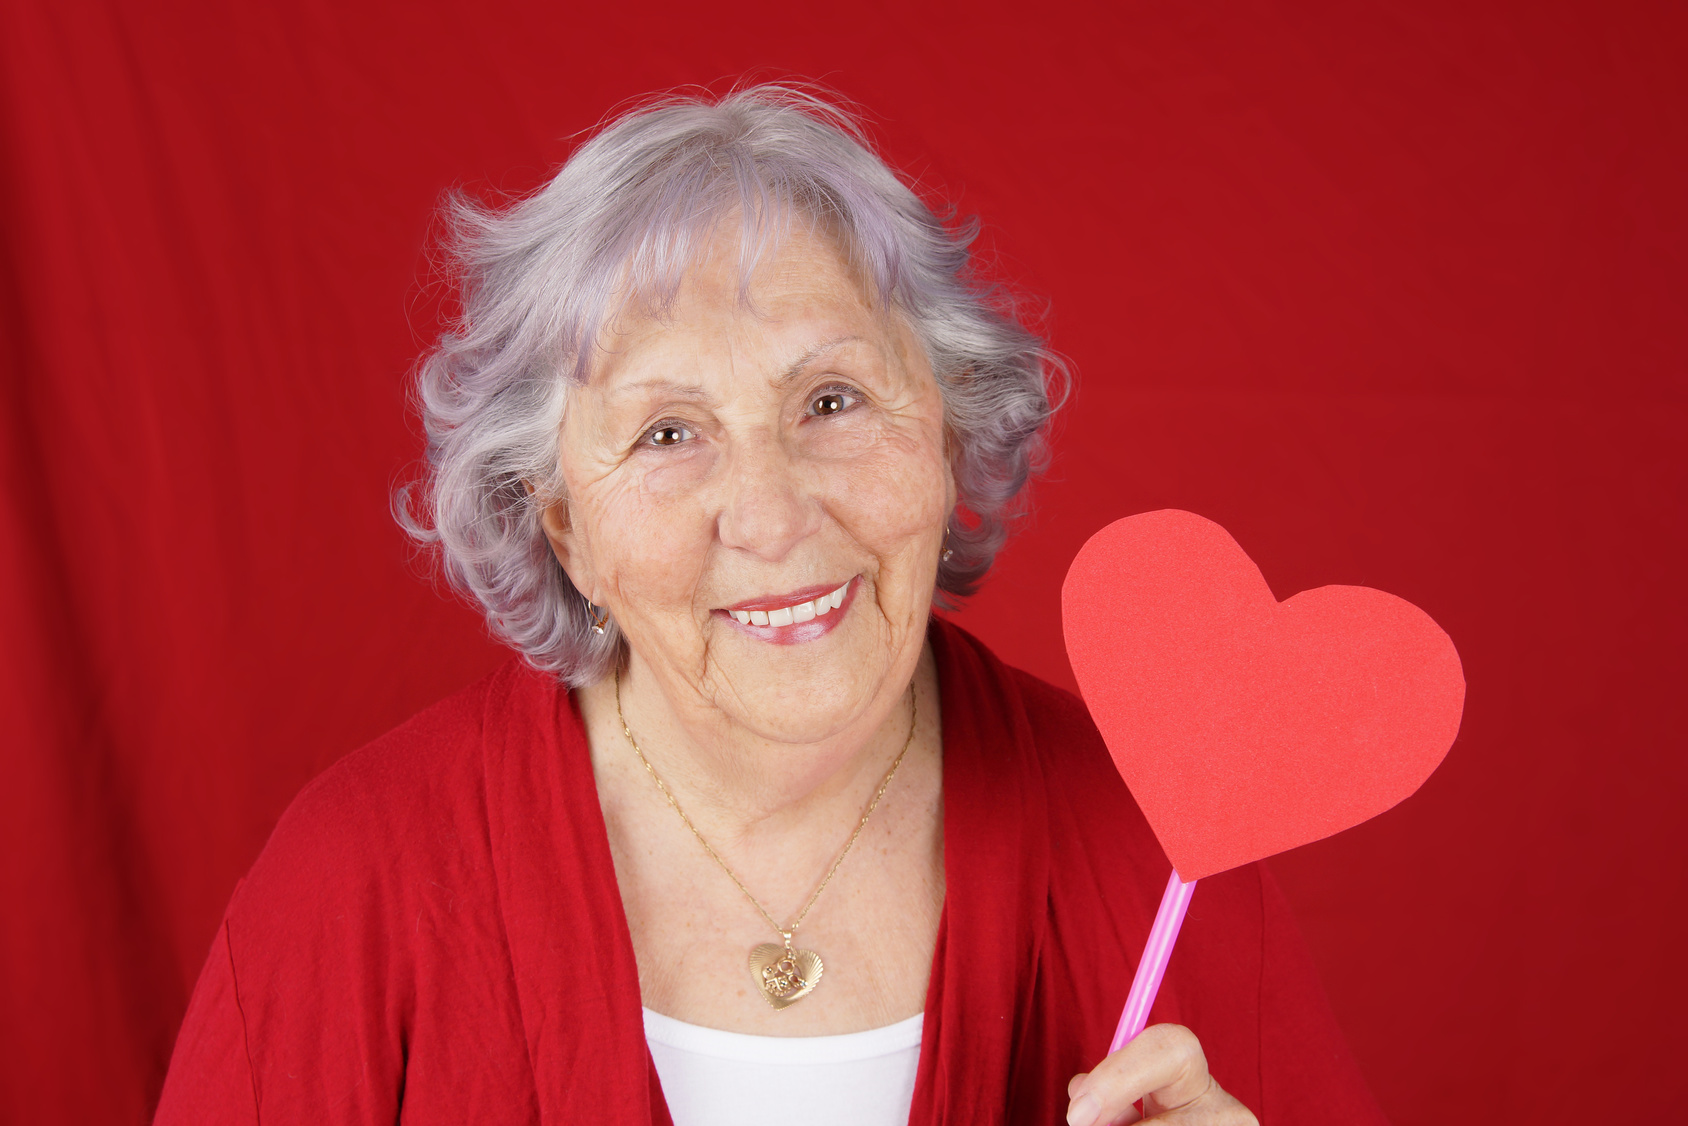 valentine crafts for senior citizens